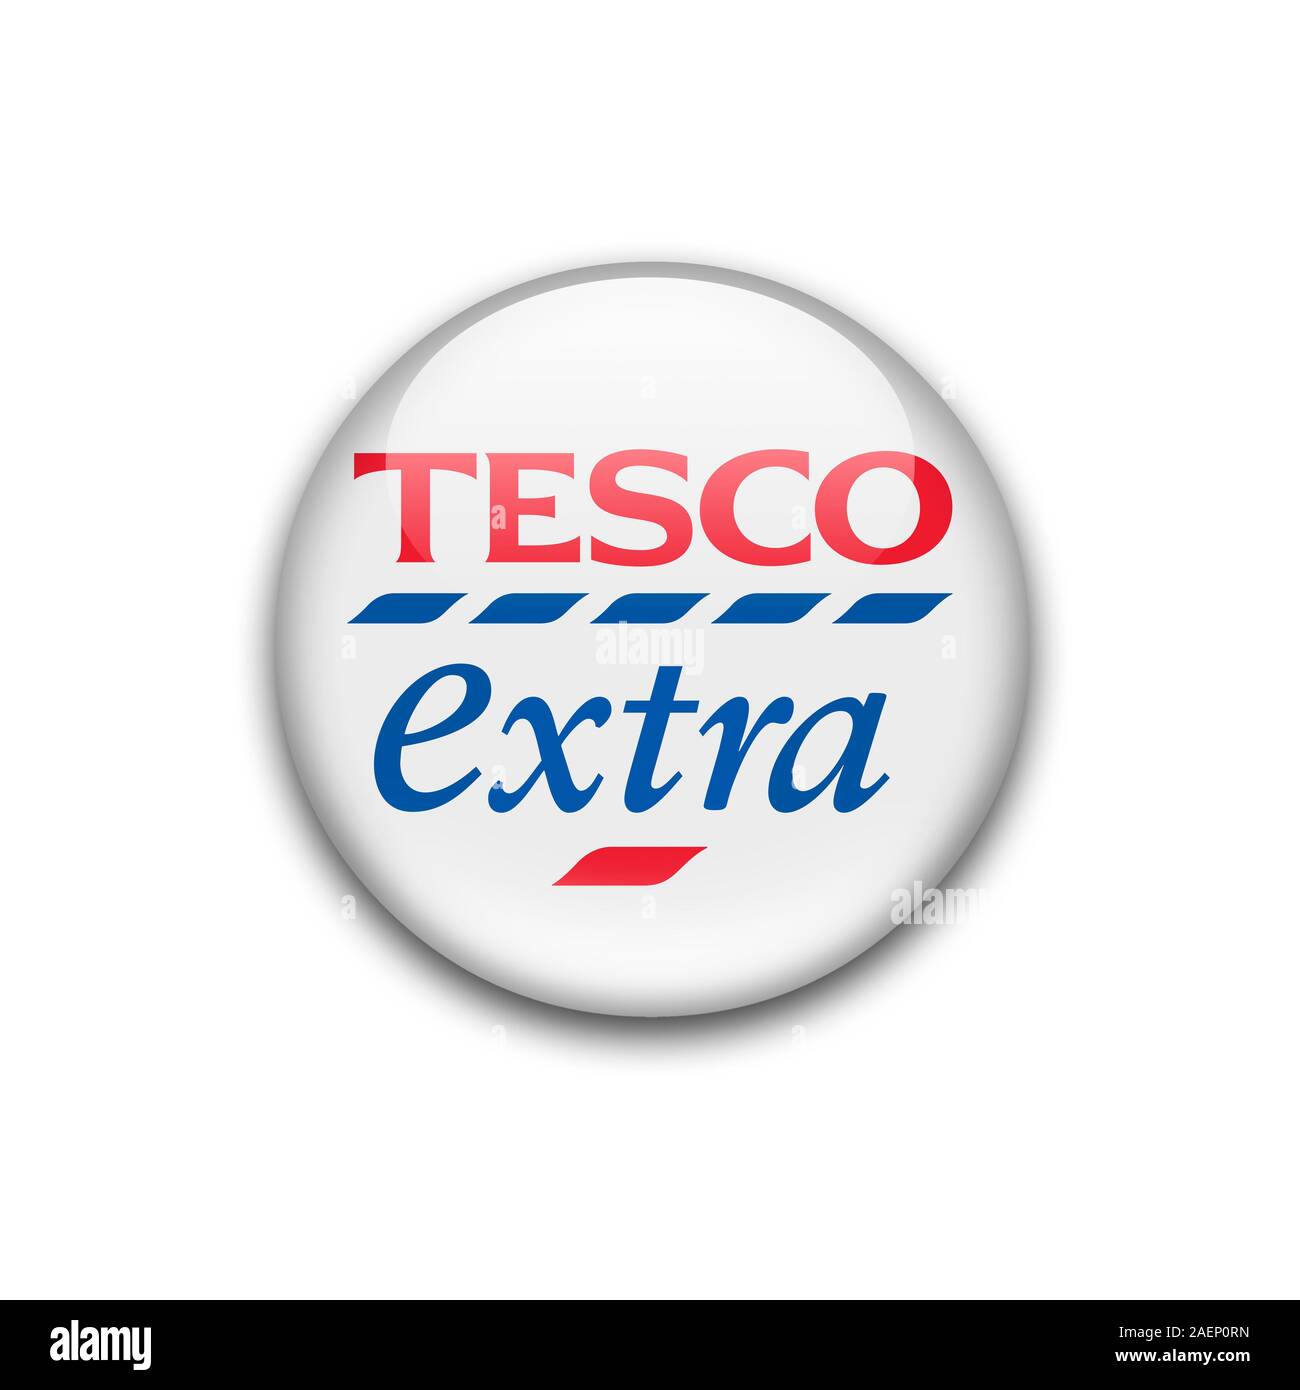 Tesco extra logo Stock Photo